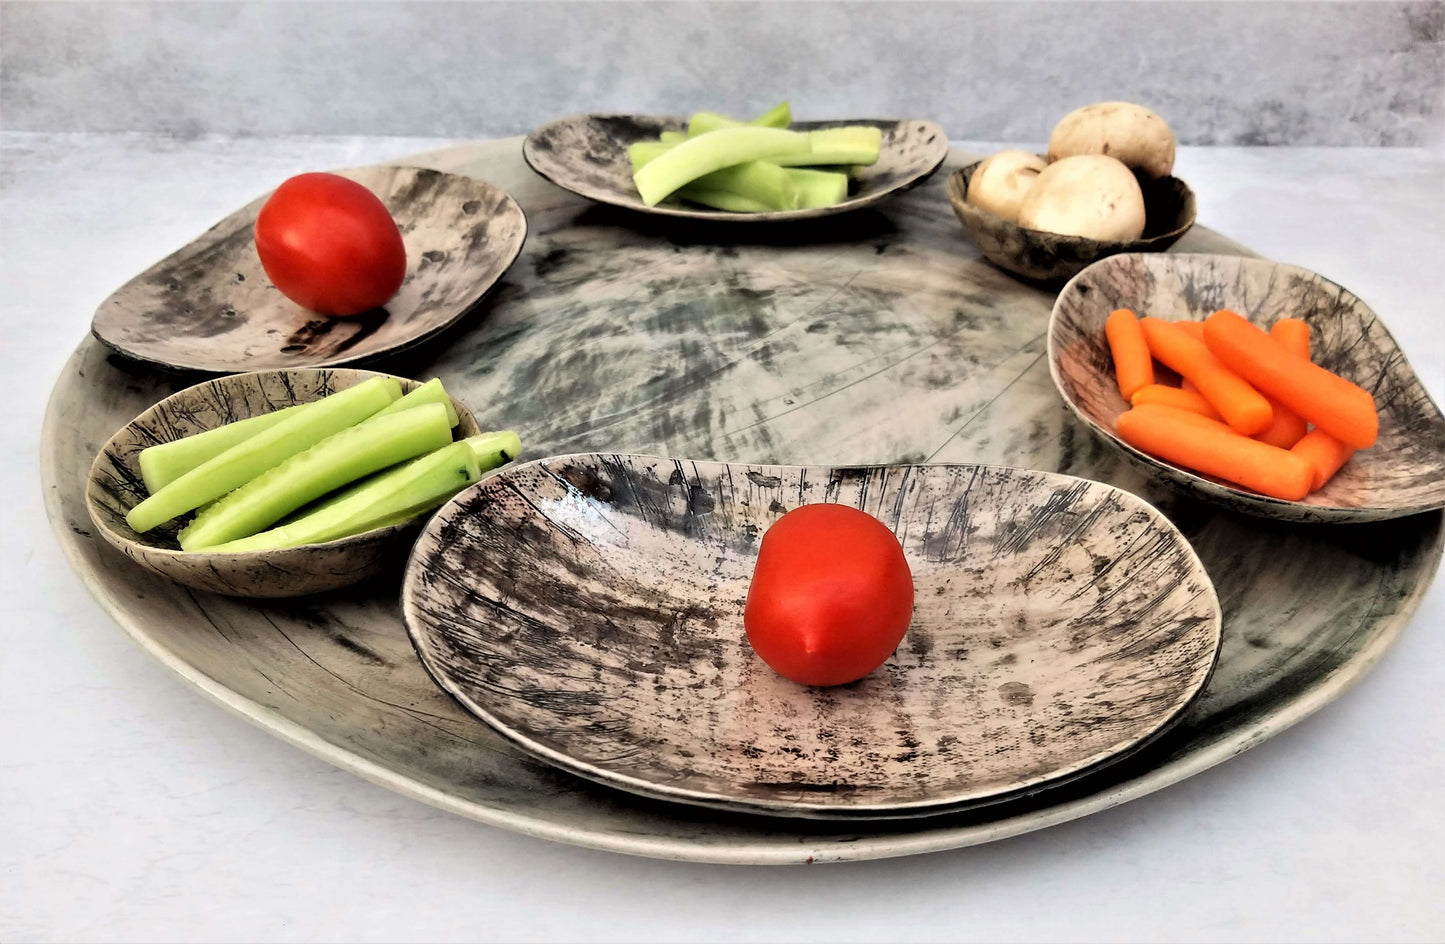 Ceramic handmade tray with food